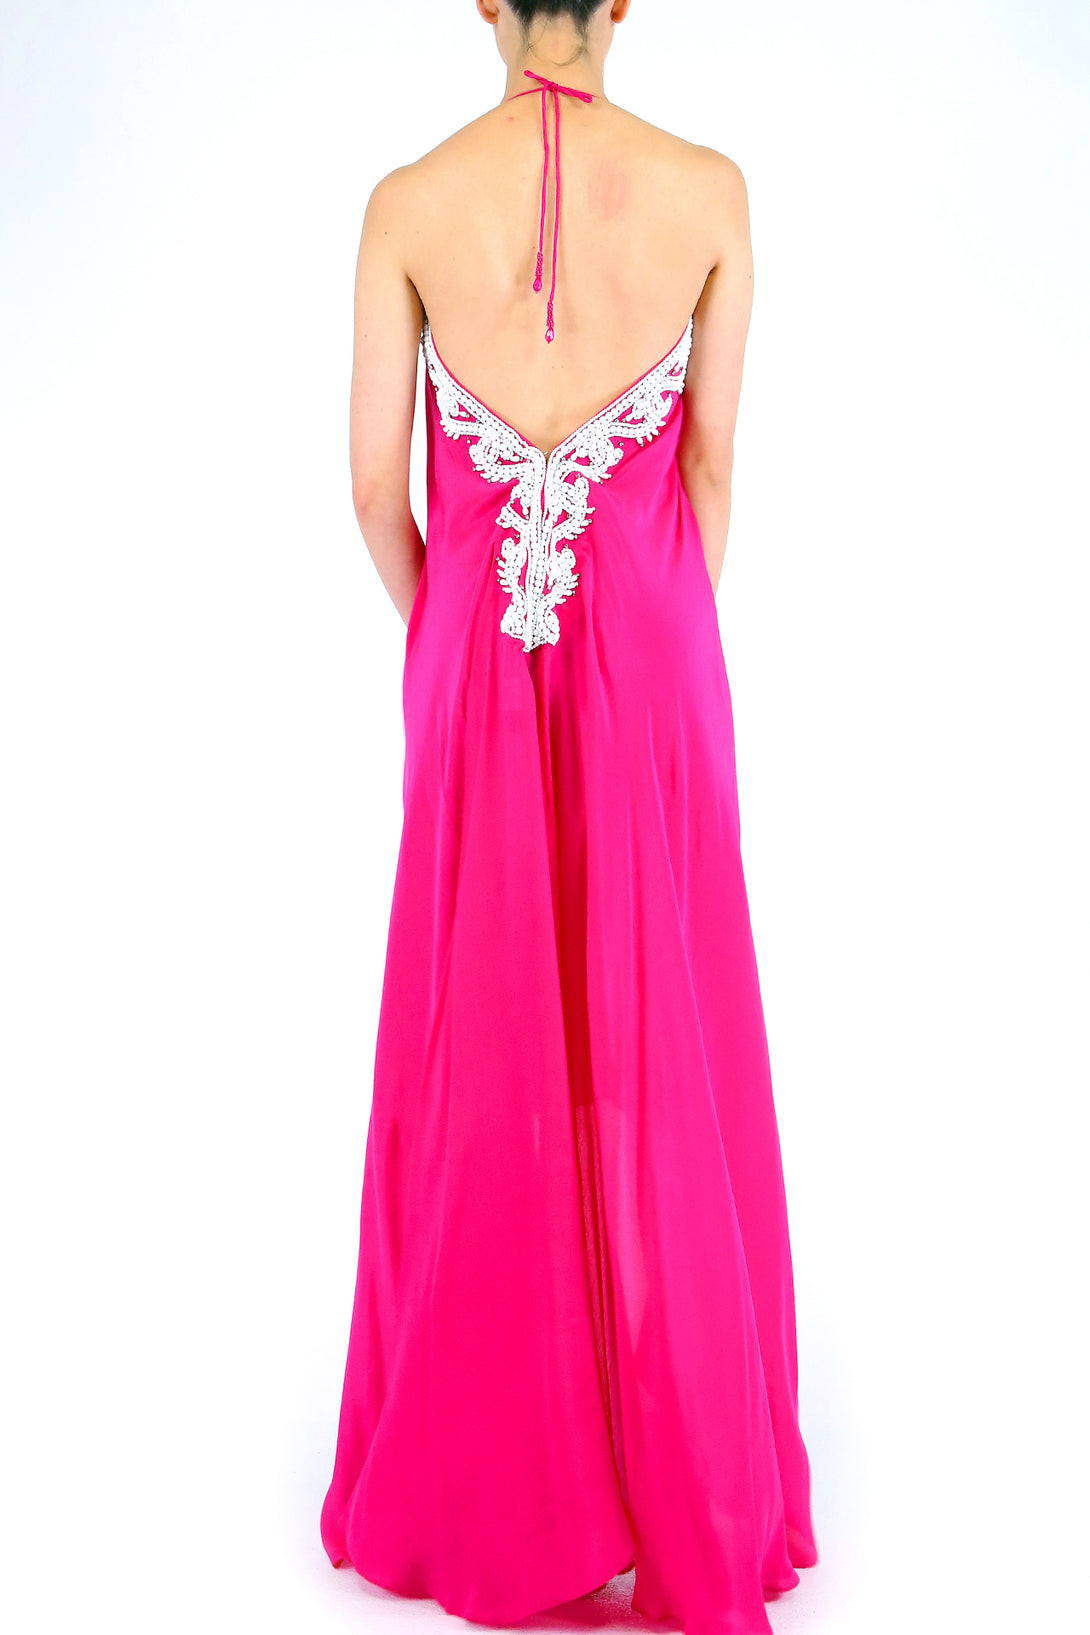  pink maxi dresses for women, plus size maxi dresses, long summer dresses, the infinity dress,